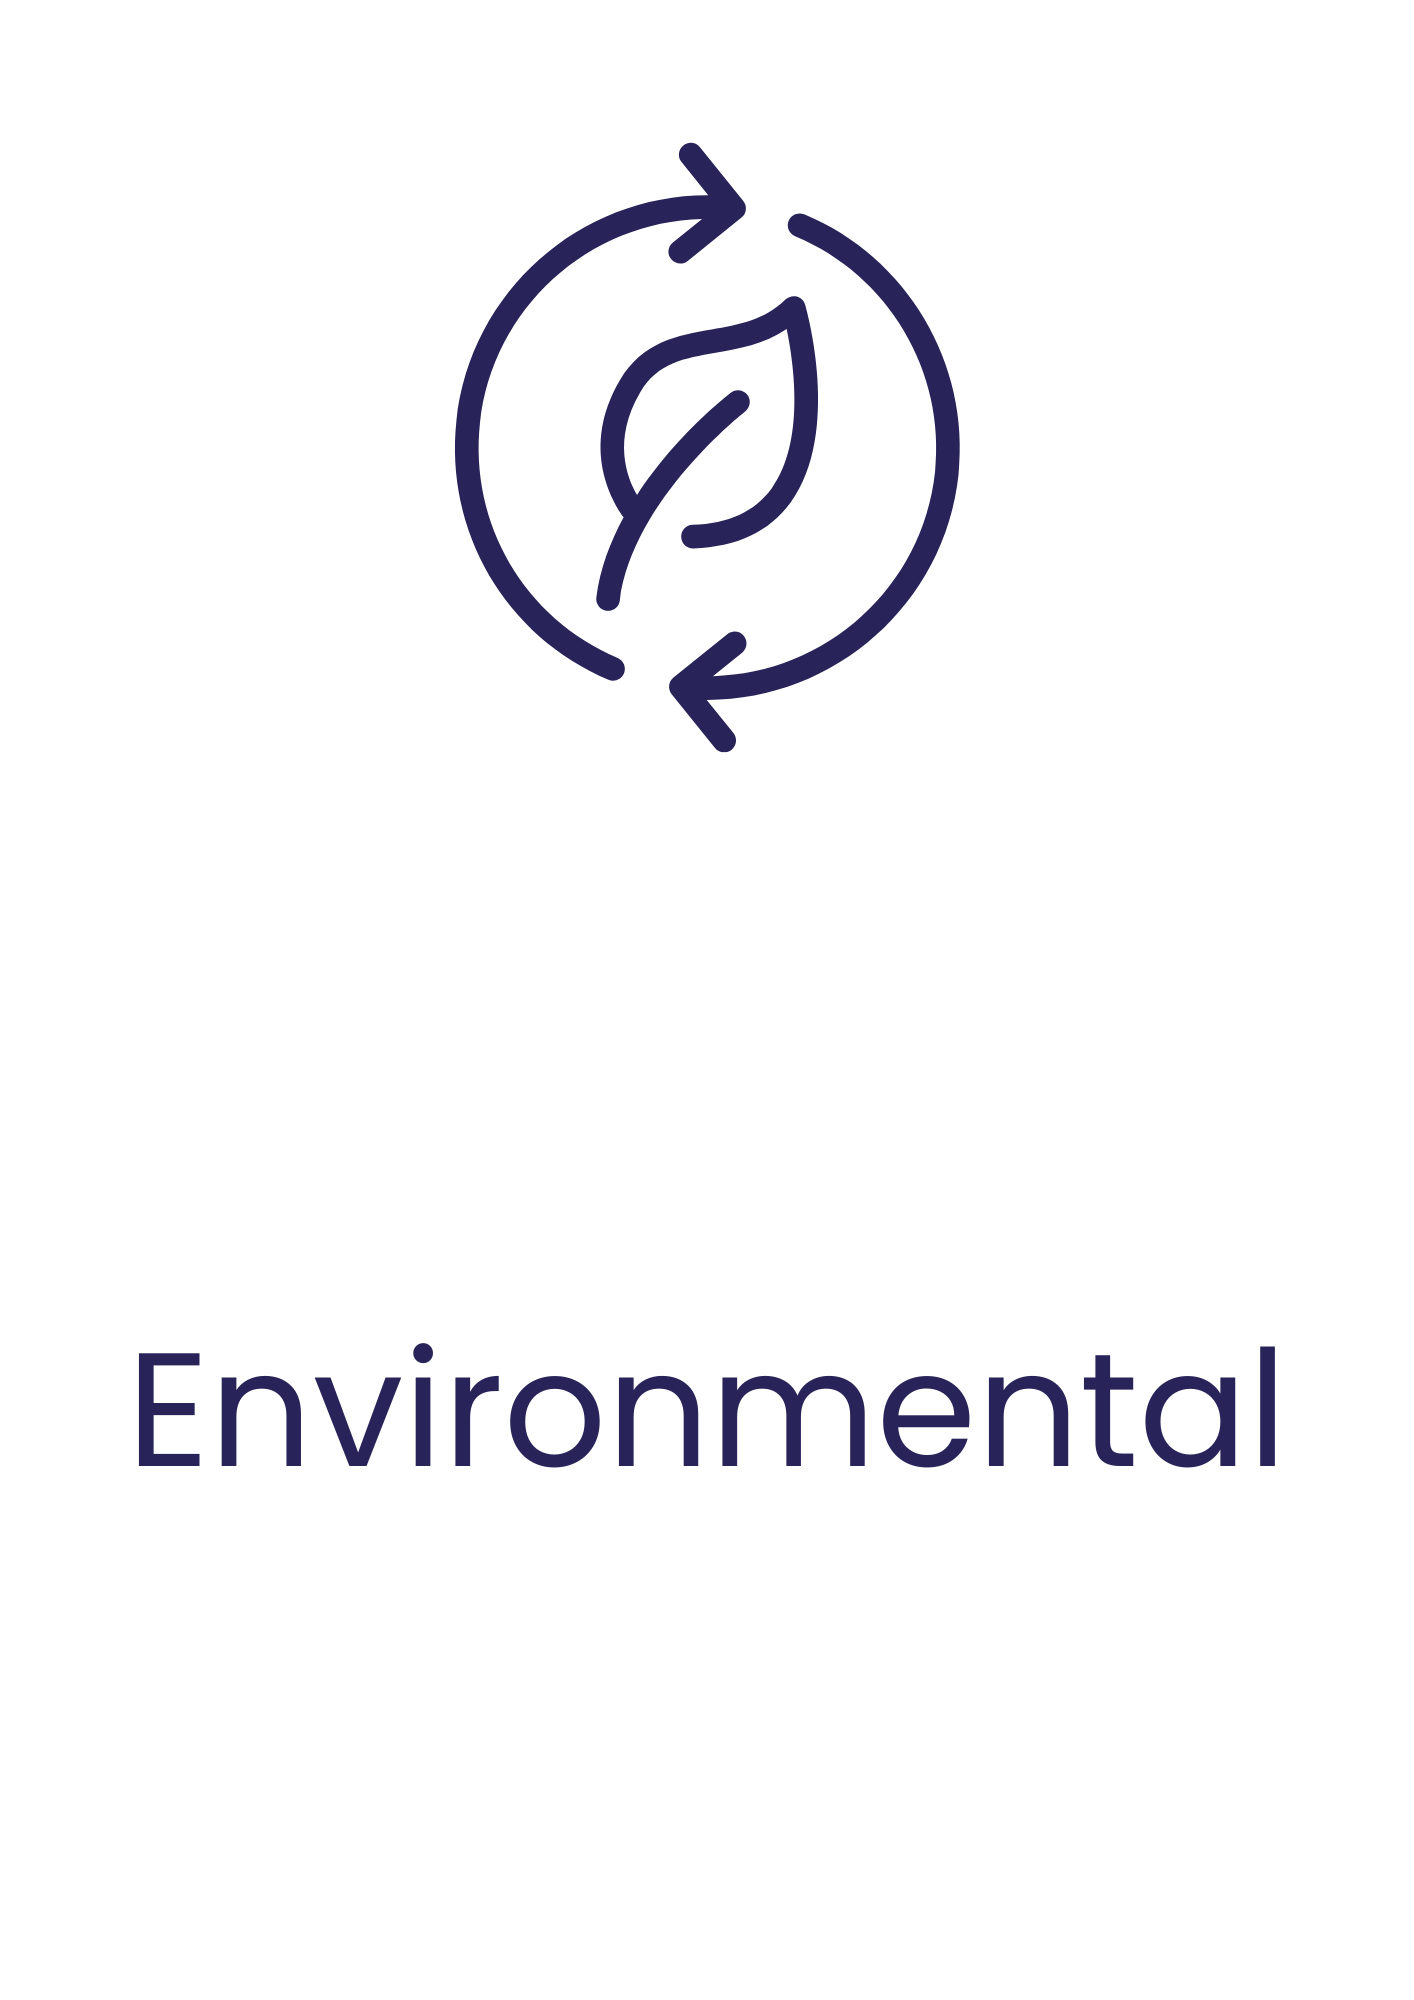 Environmental funding